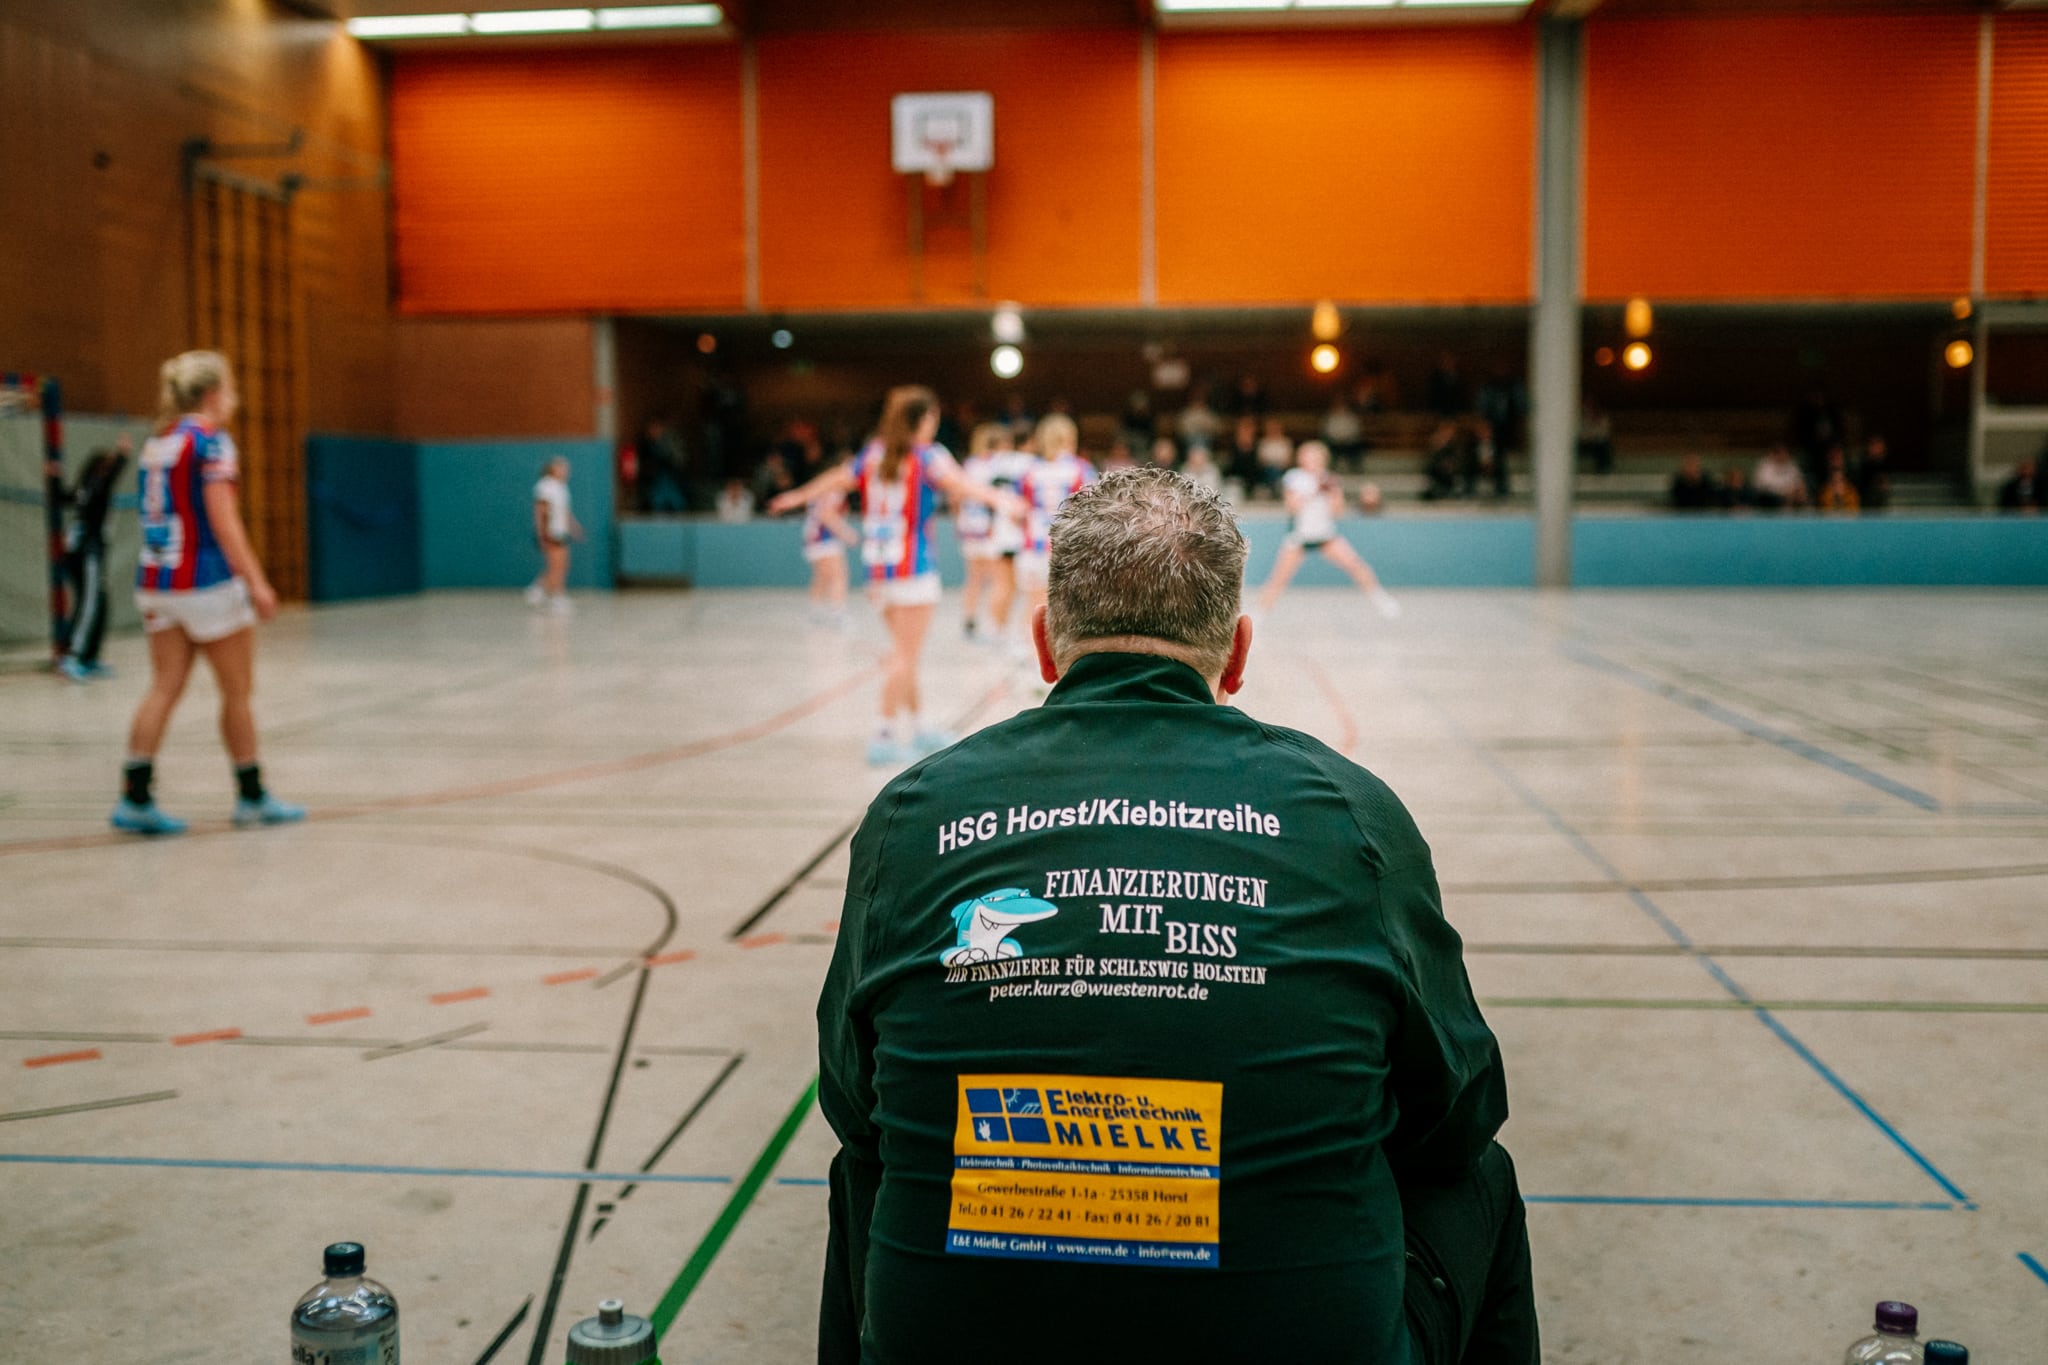 HSG Horst Kiebitzreihe, Handball, Damenmannschaft, Sport, Eventfotografie, Sportfotografie